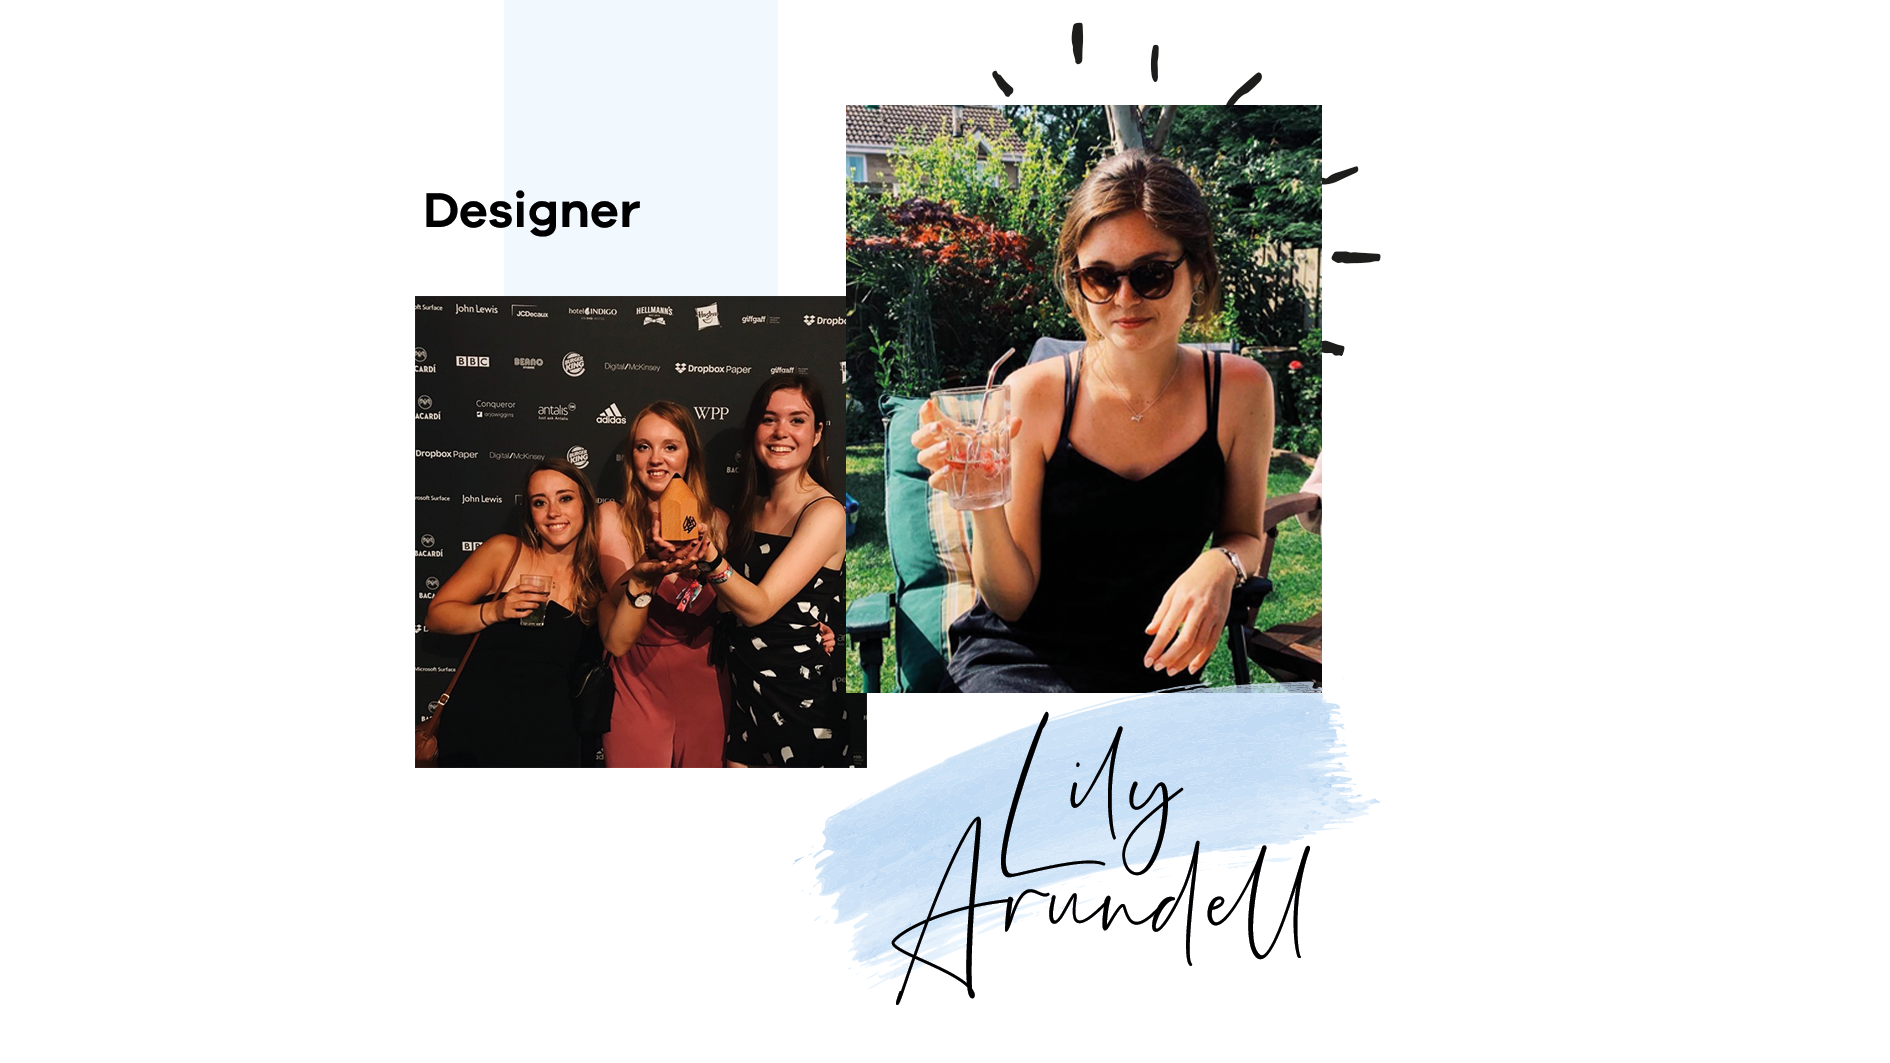 Lily Arundell - Designer